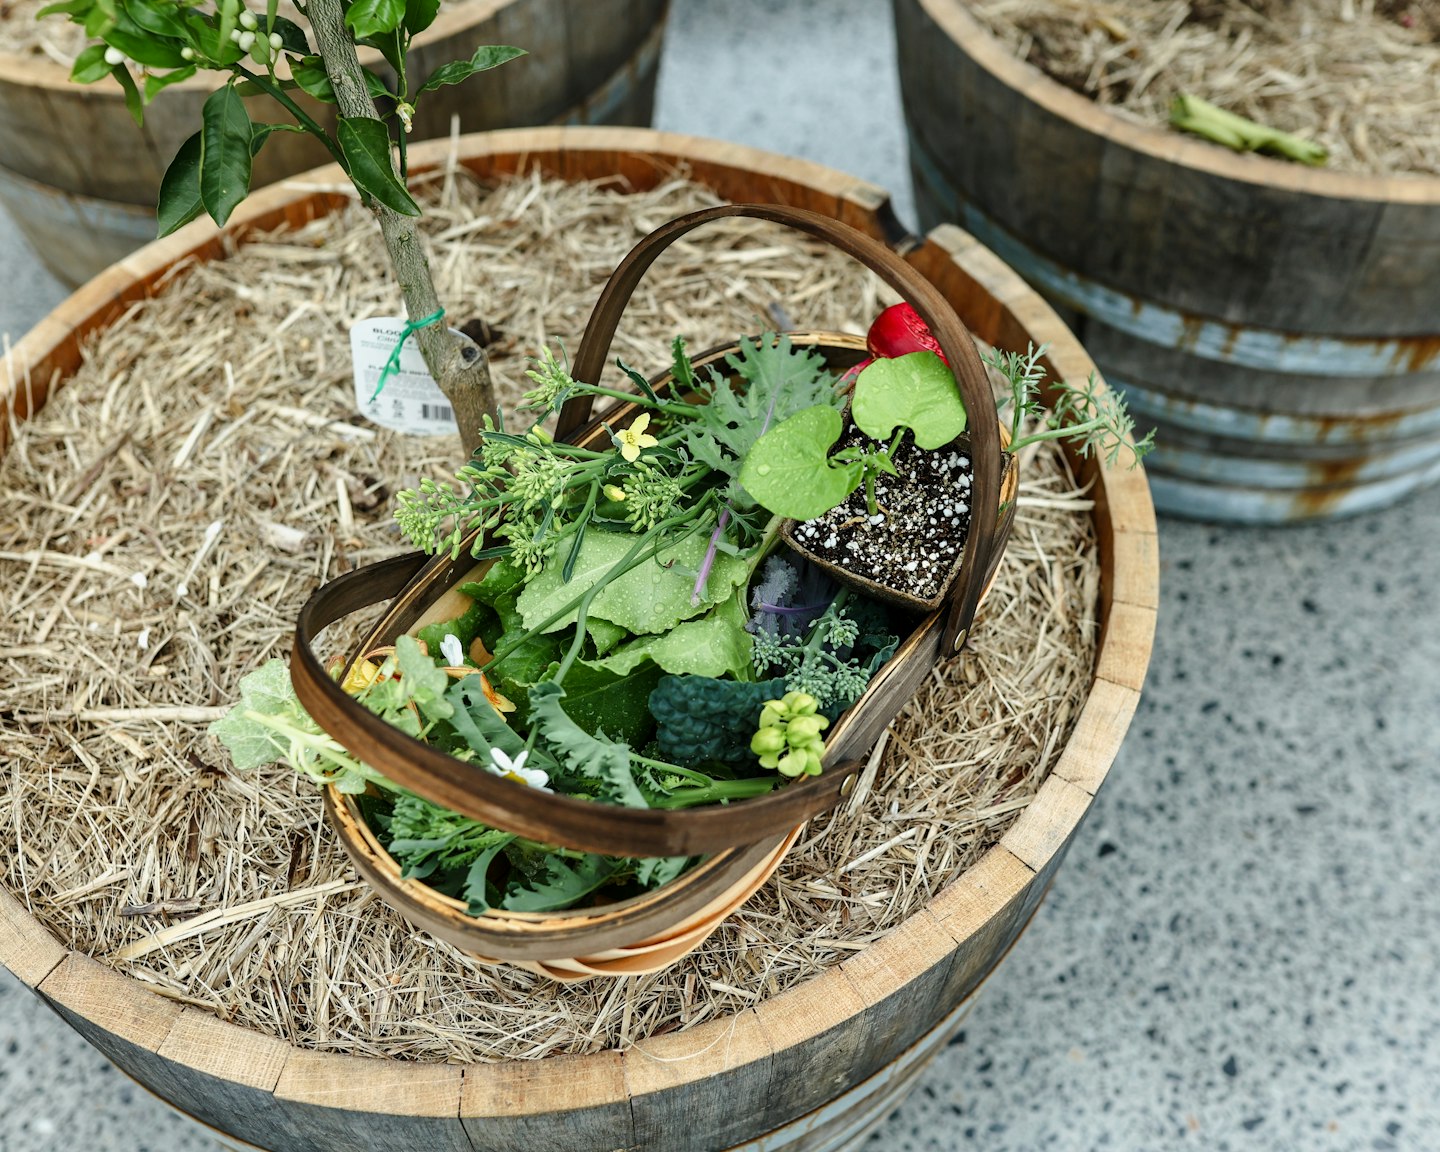 a basket with garden produce